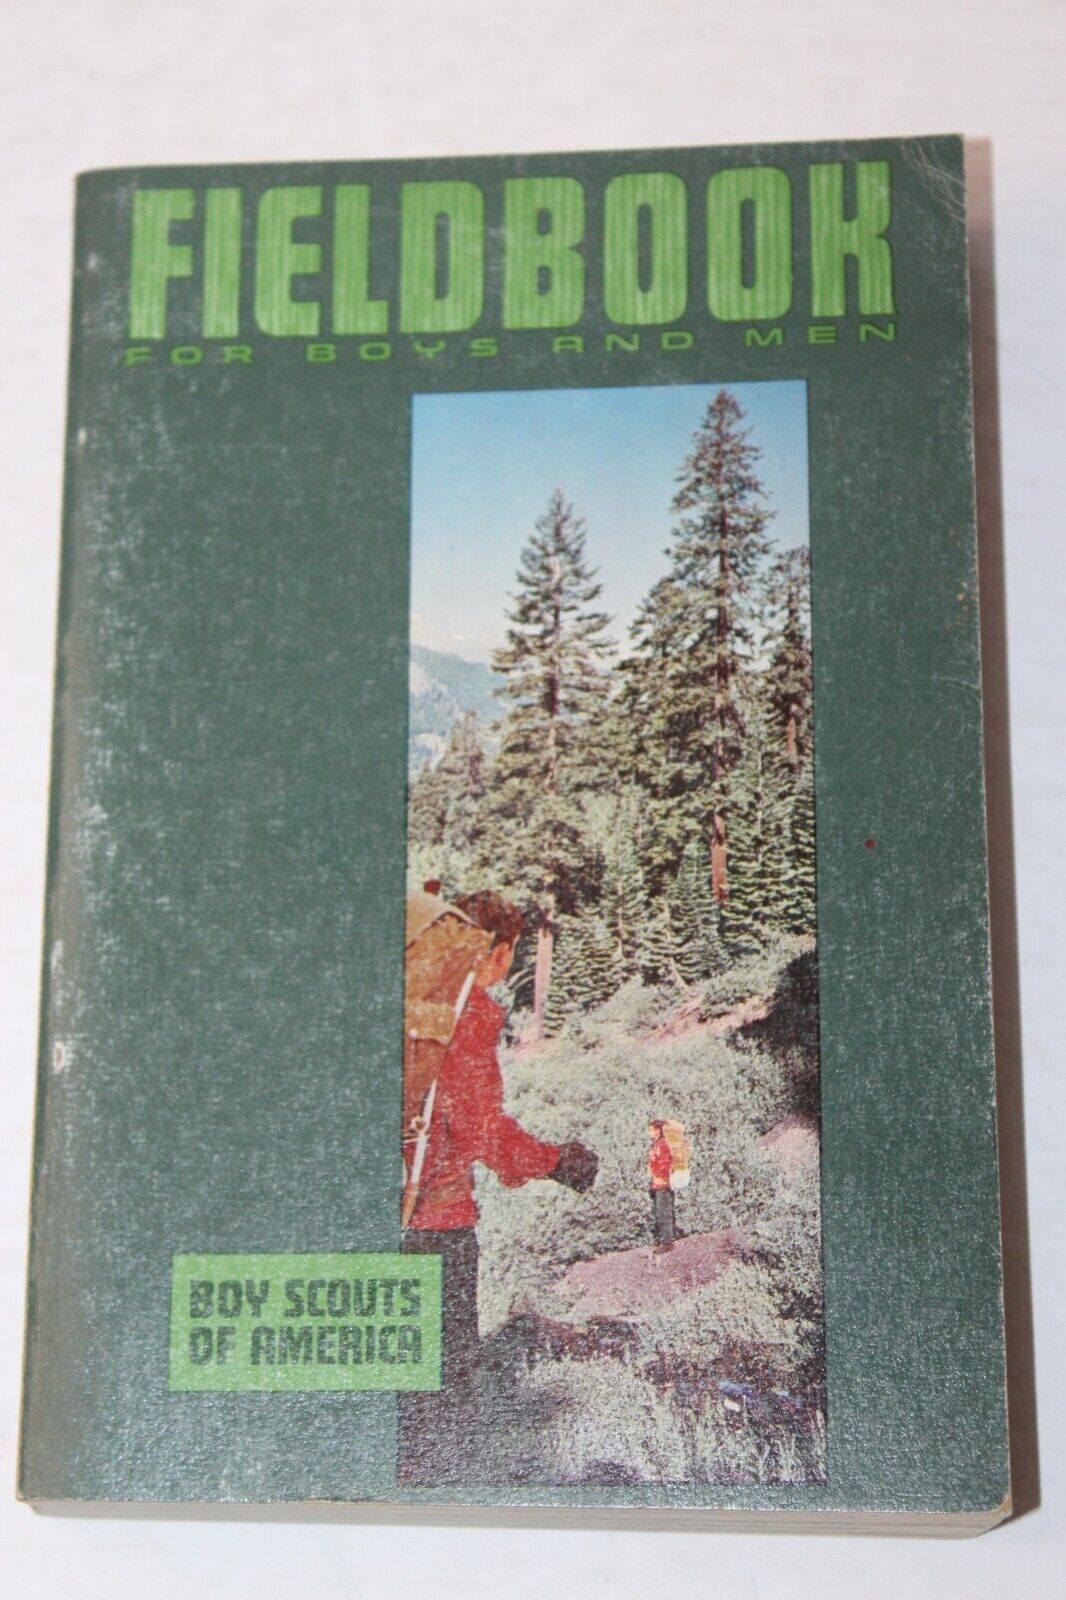 Fieldbook for Boys and Men BSA April 1967 Printing with Green Bar Bill Card PB